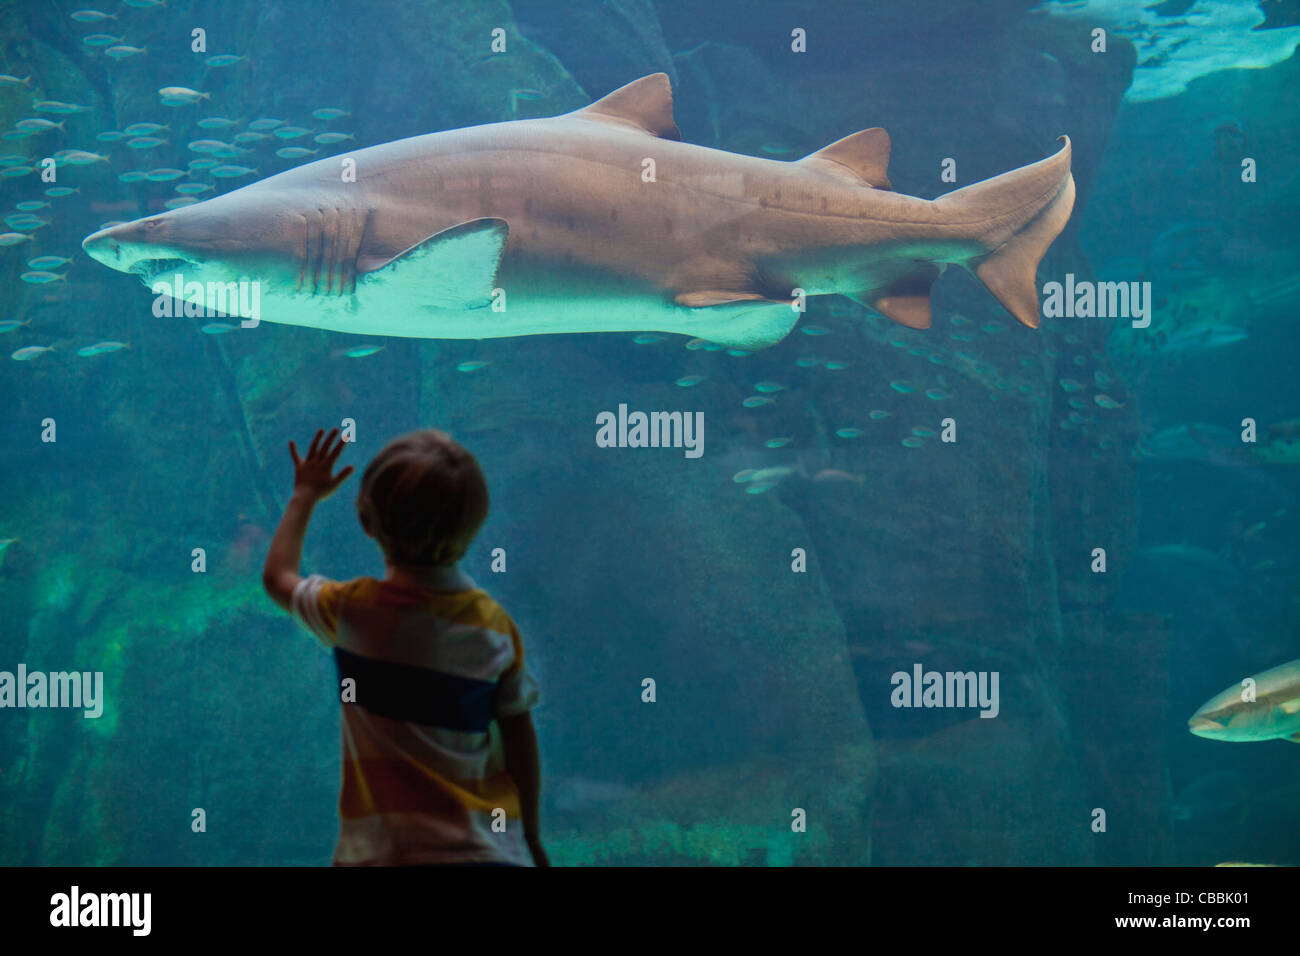 Garçon admirer dans l'aquarium des requins Banque D'Images